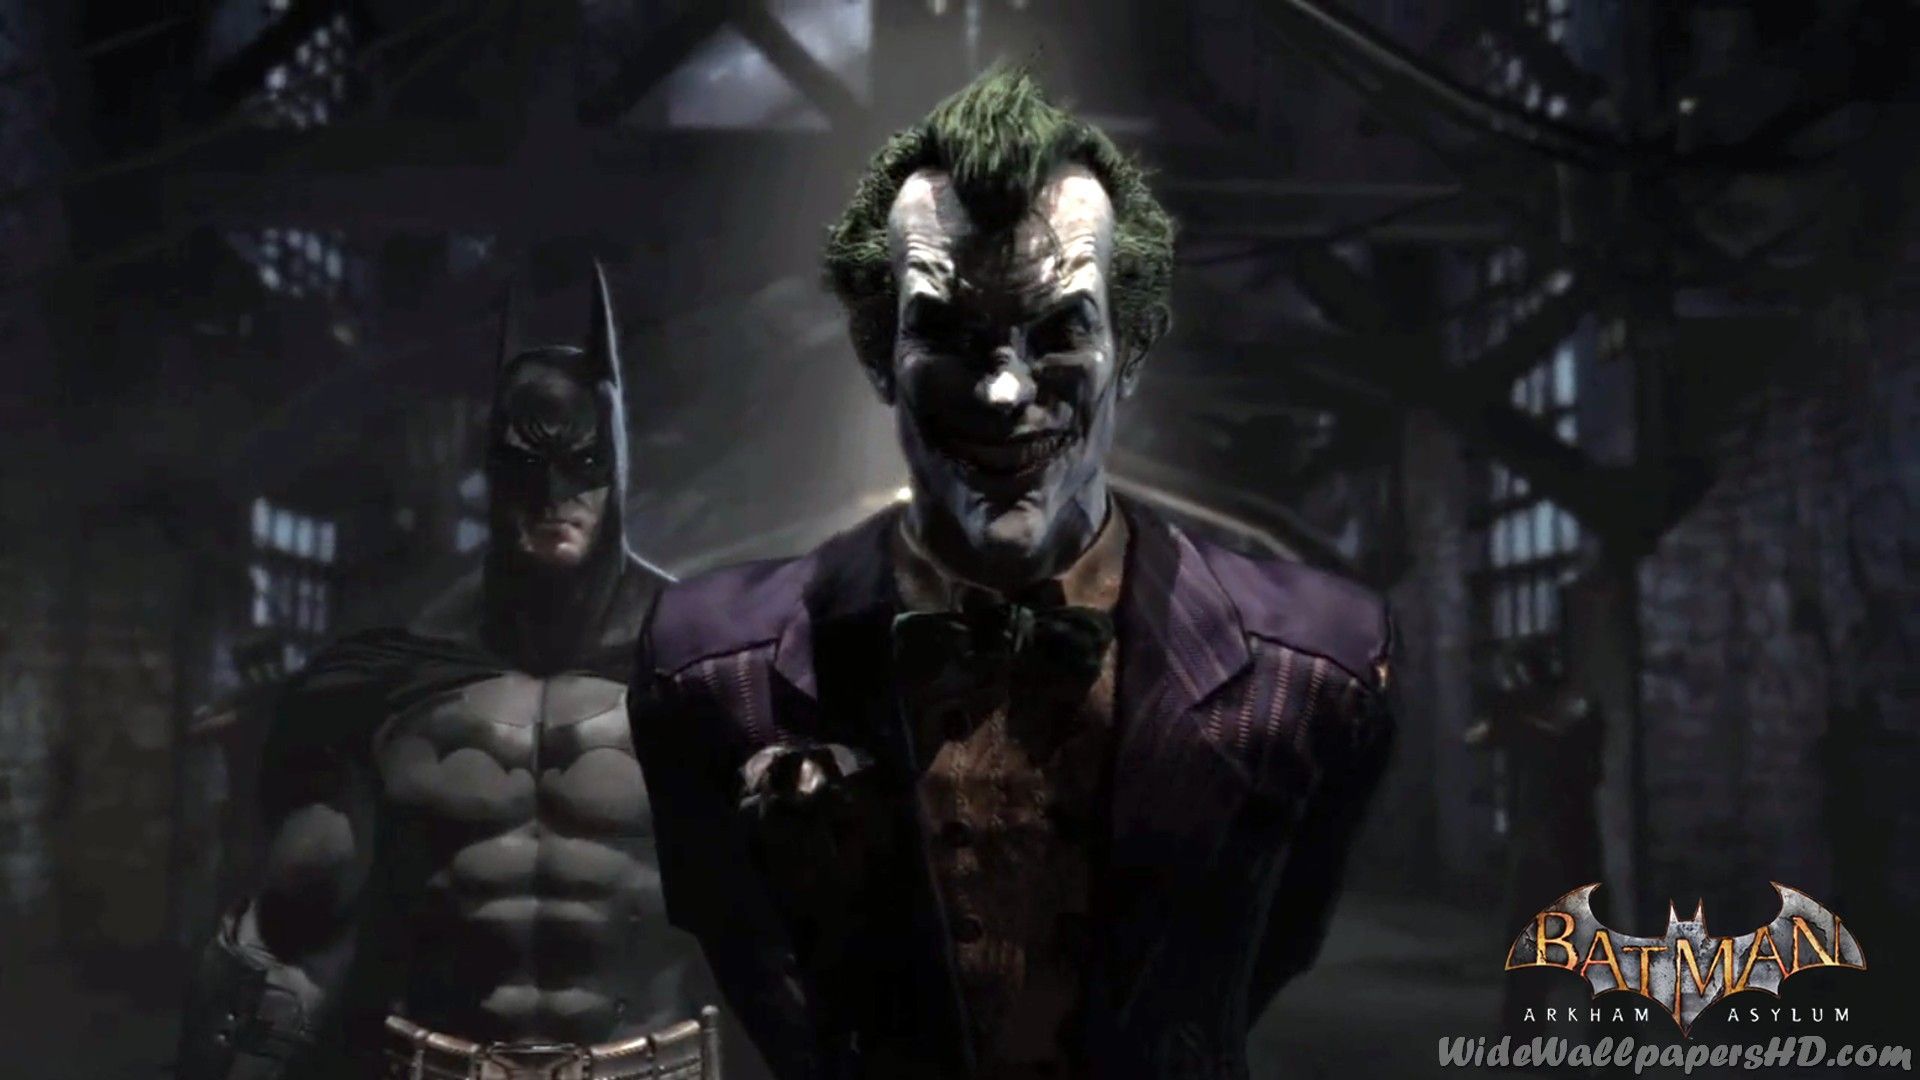 Batman Arkham Asylum Artwork HD Superheroes 4k Wallpapers Images  Backgrounds Photos and Pictures